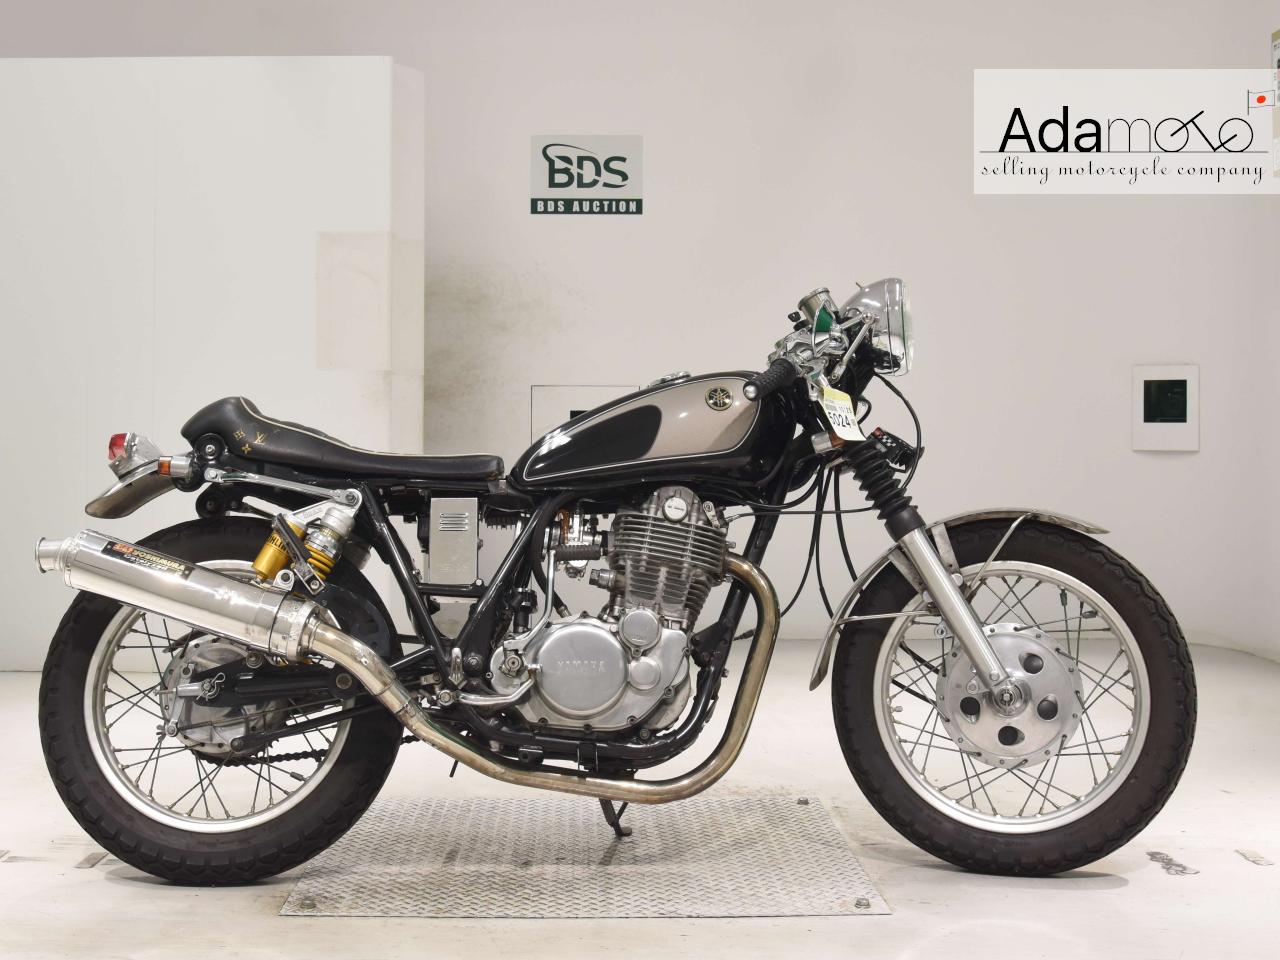 Yamaha SR400 2 - Adamoto - Motorcycles from Japan